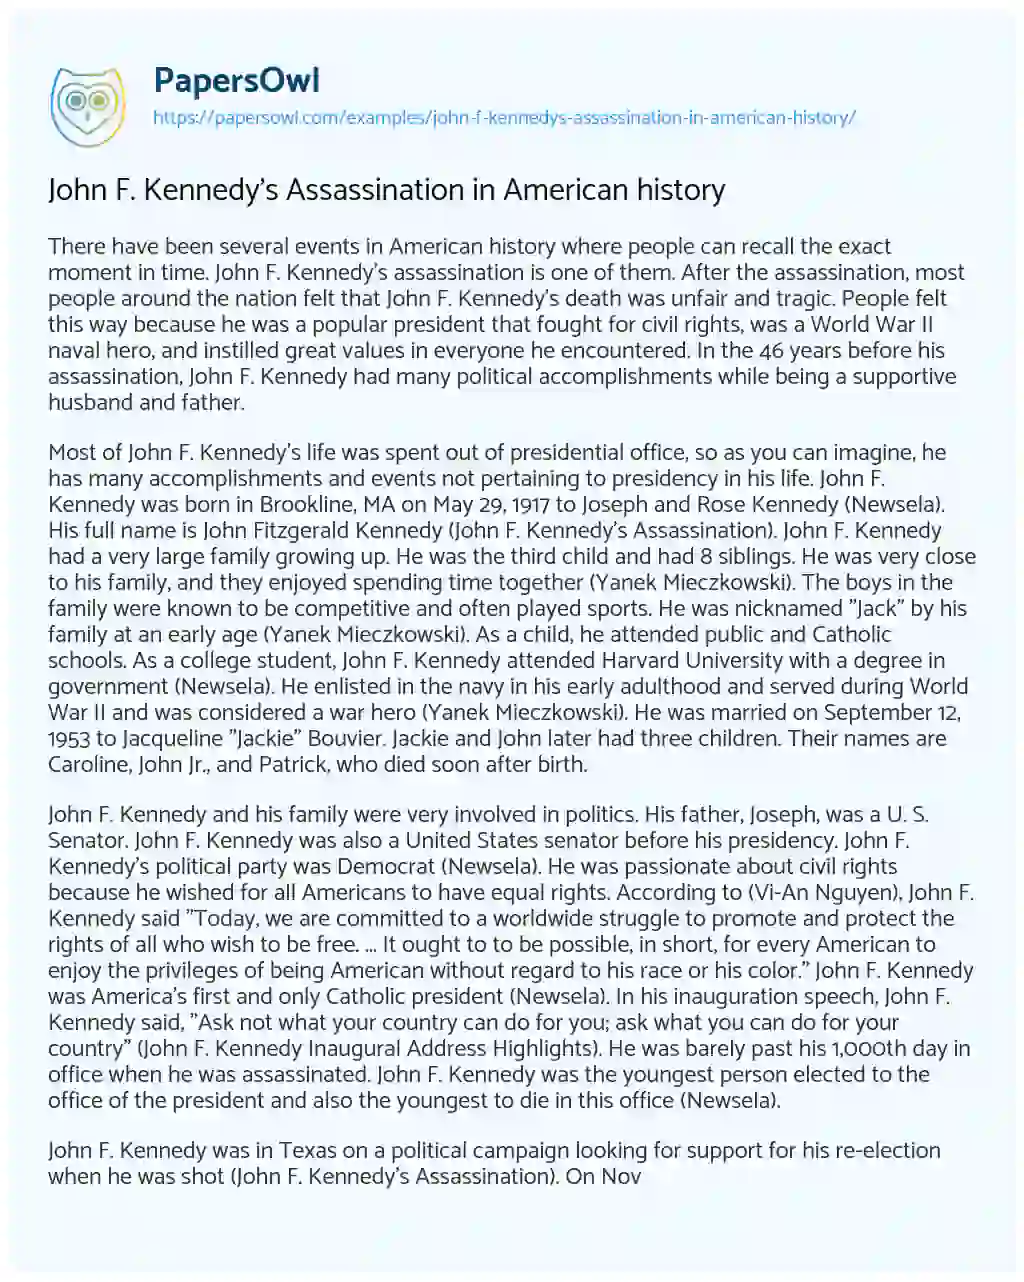 Essay on John F. Kennedy’s Assassination in American History